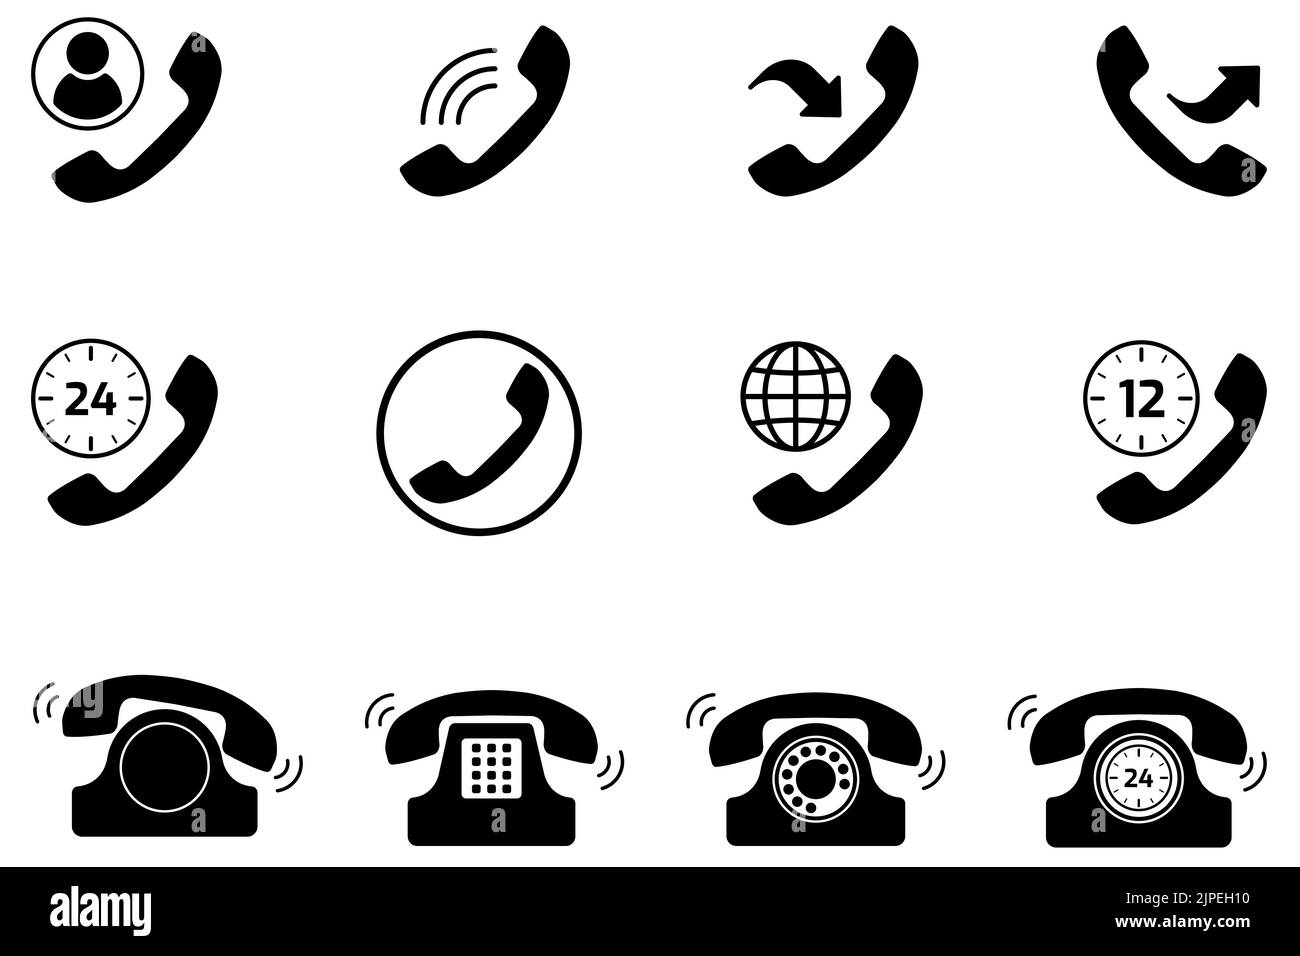 Telefon-Symbol eingestellt. Sammlung von Telefonsymbolen. Flache Vektorgrafik Stock Vektor